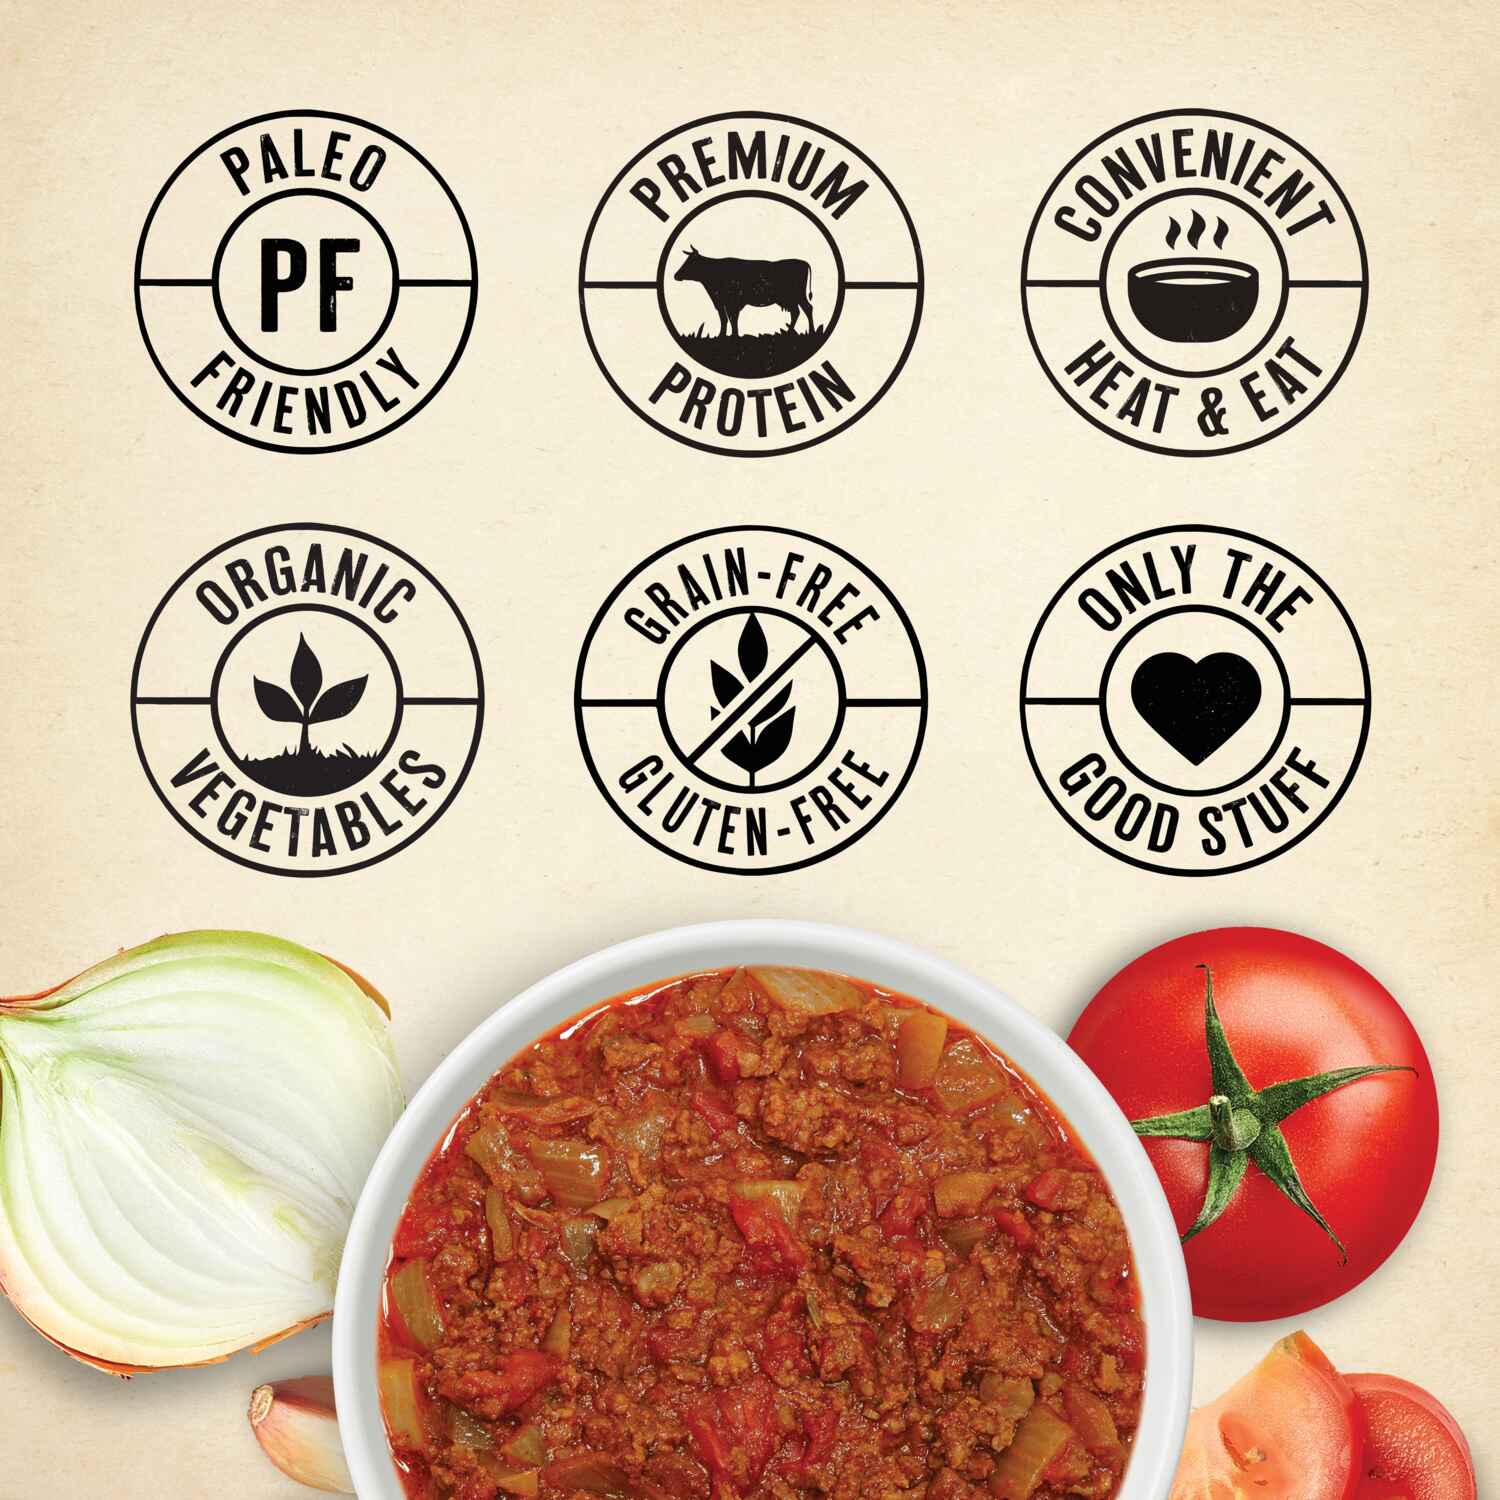 True Primal Beef Chili benefits